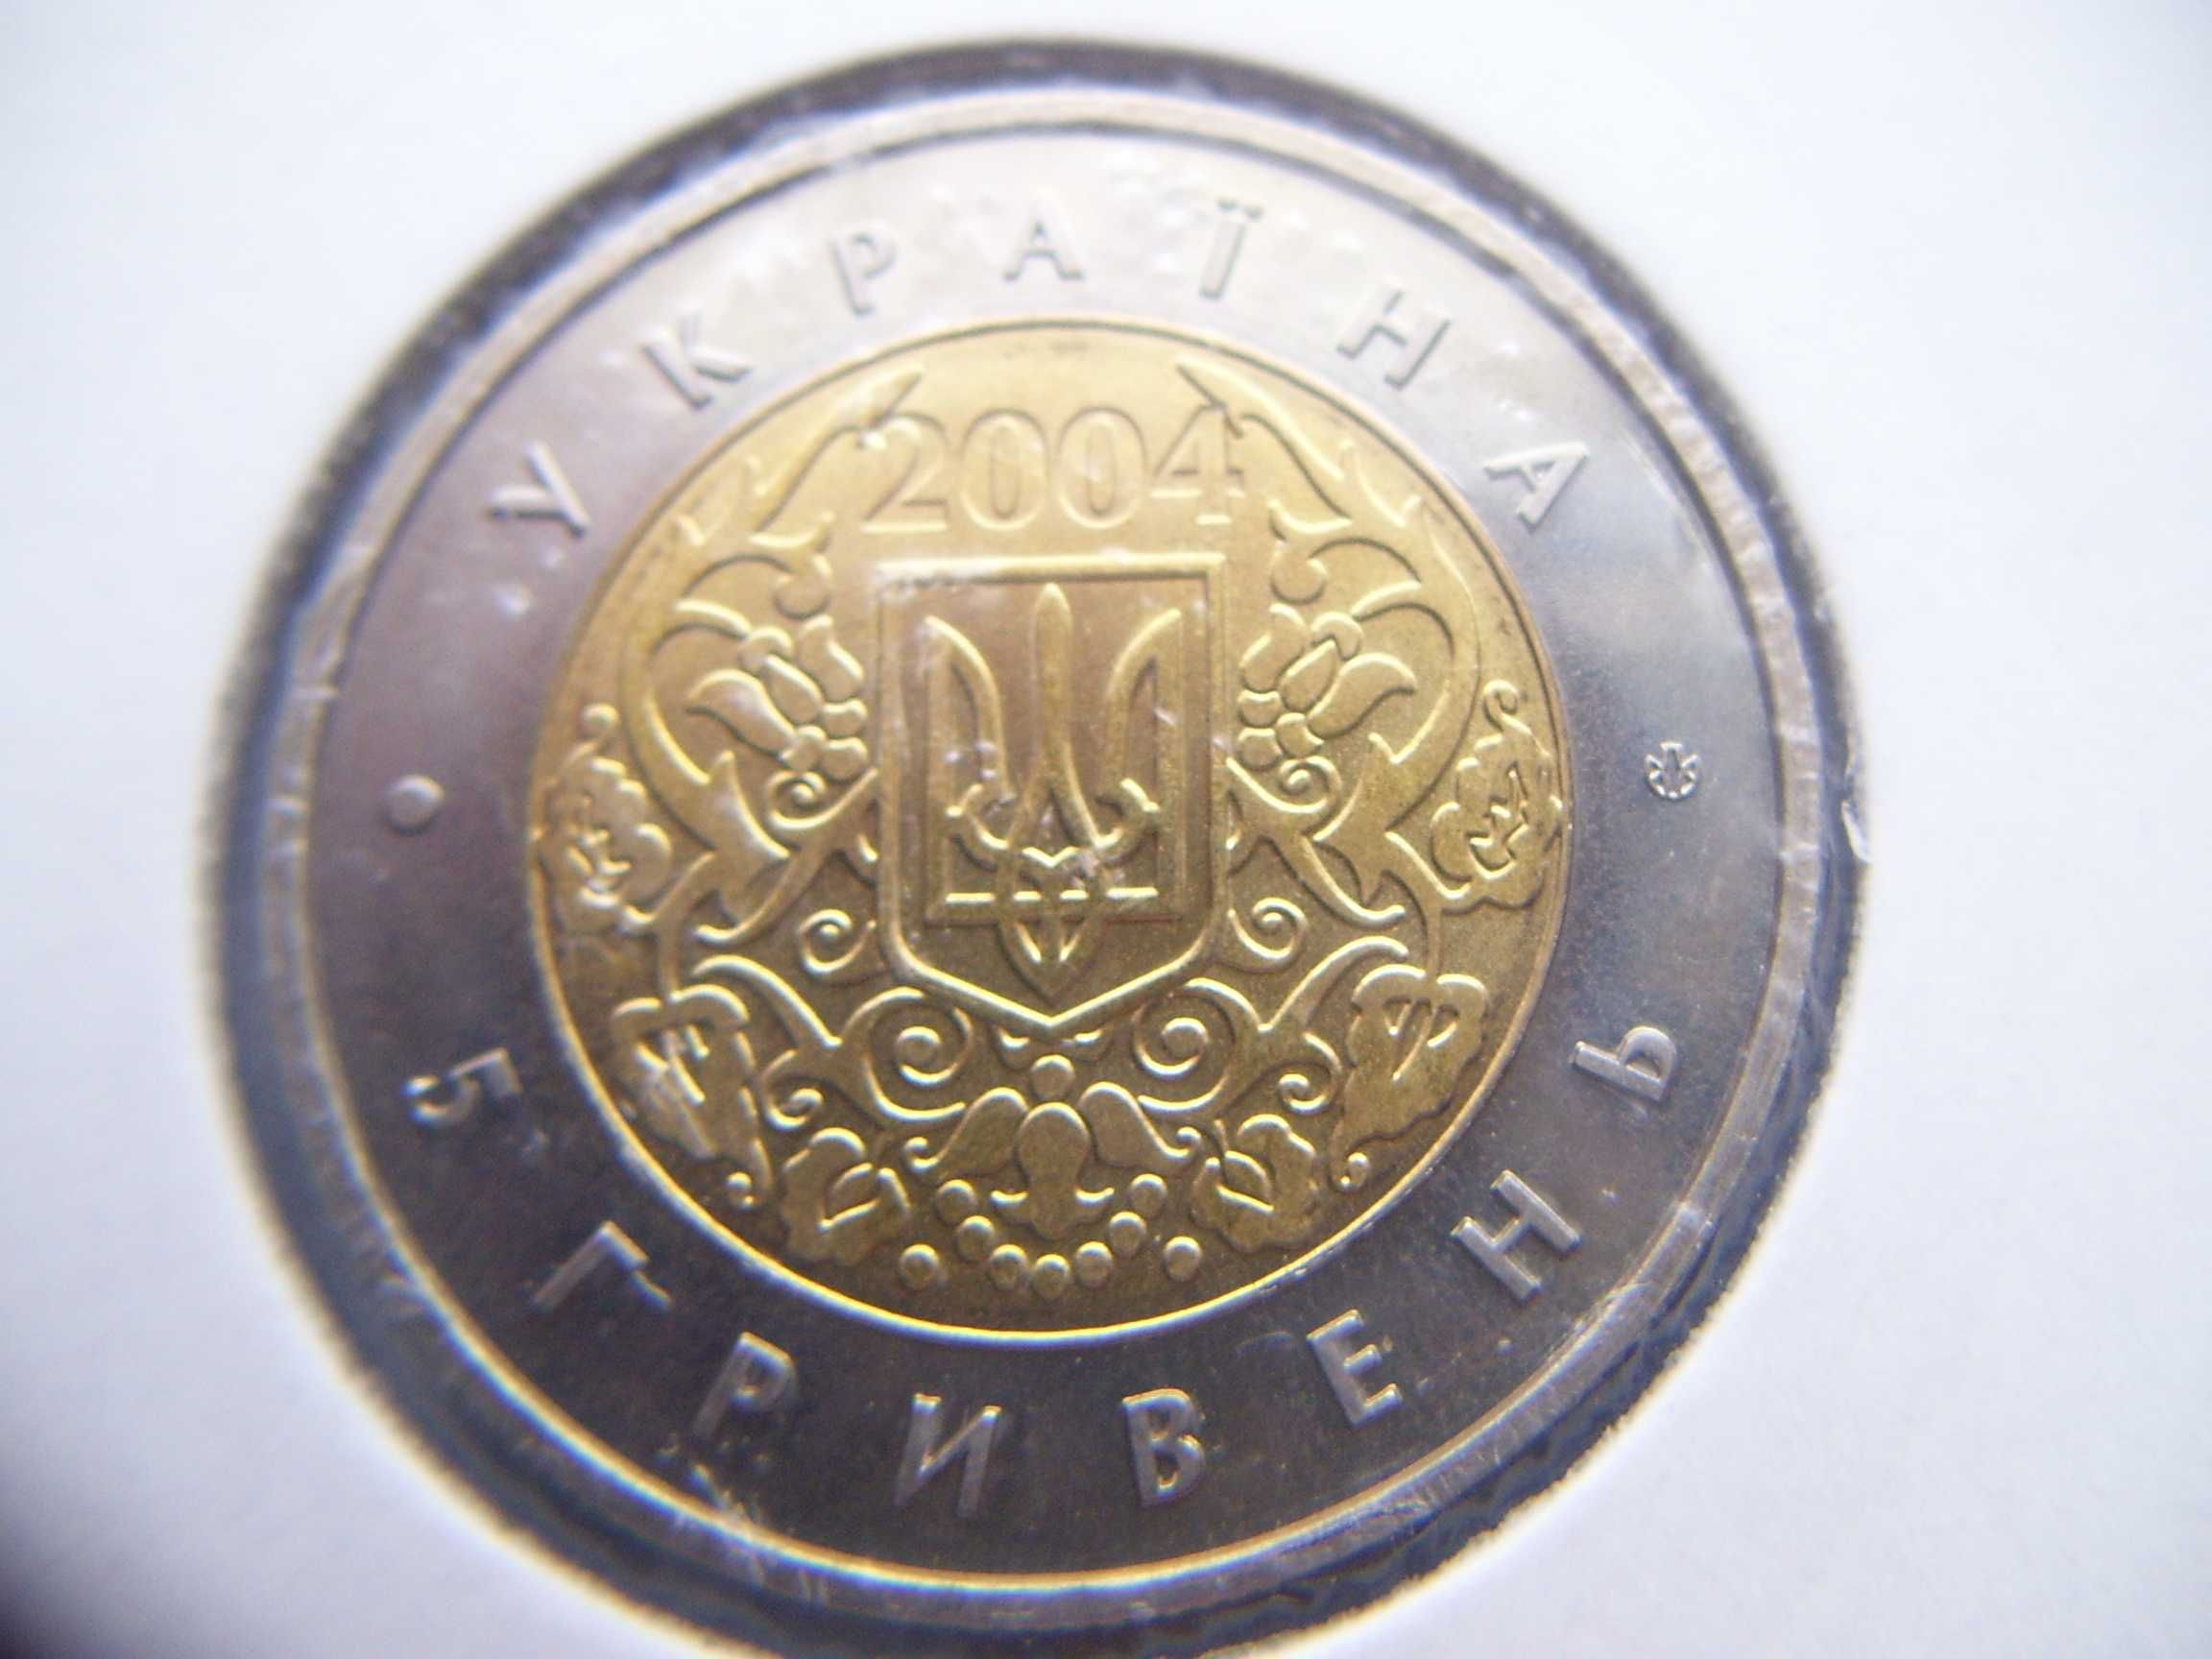 Stare monety 5 hrywien 2004 Ukraina piękna